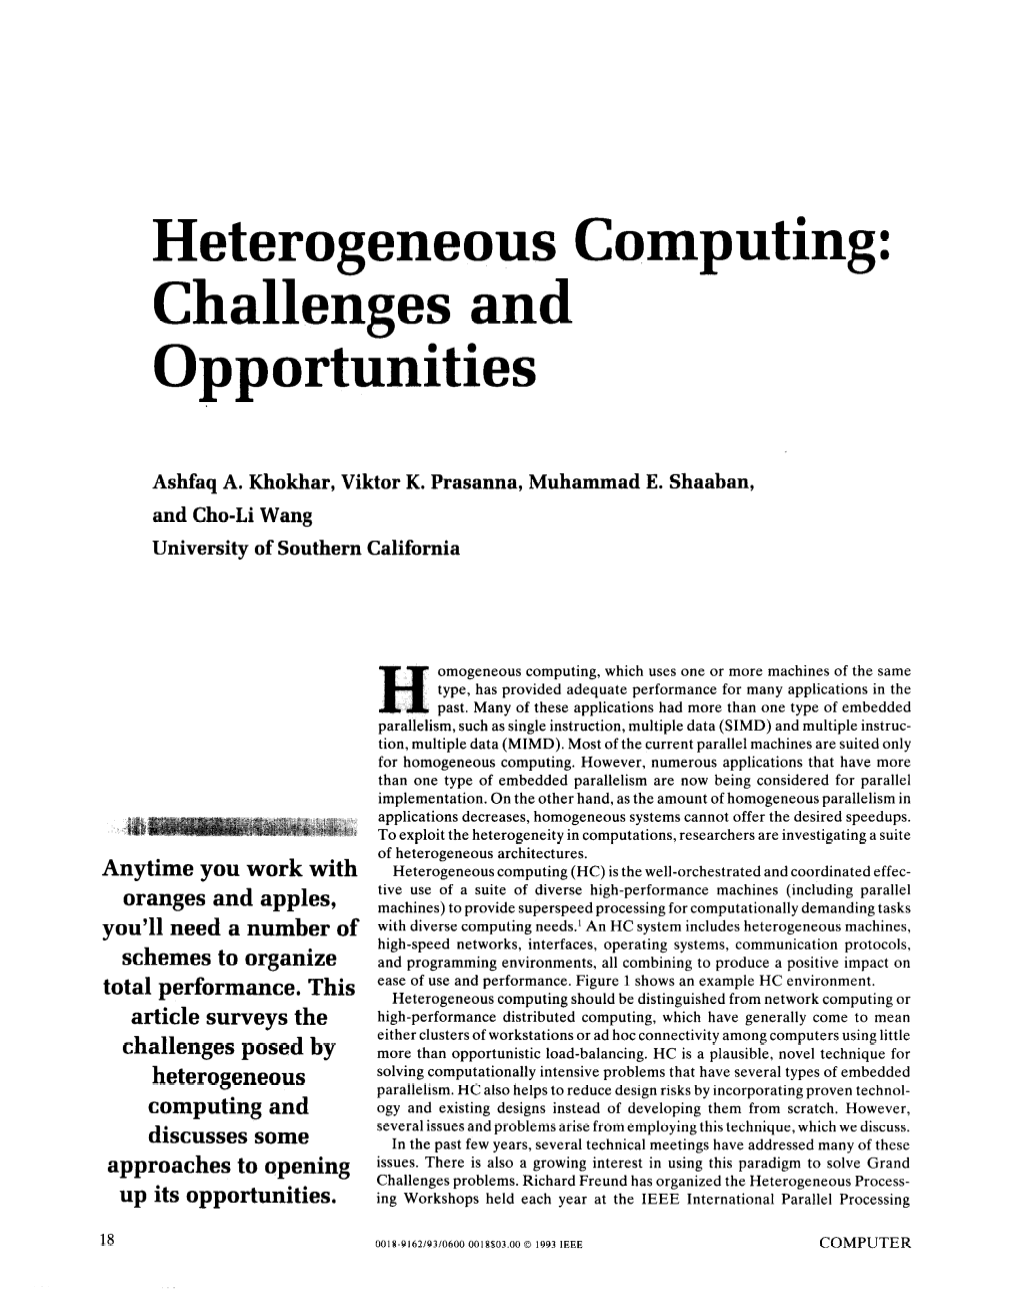 Heterogeneous Computing: Challenges and Opportunities